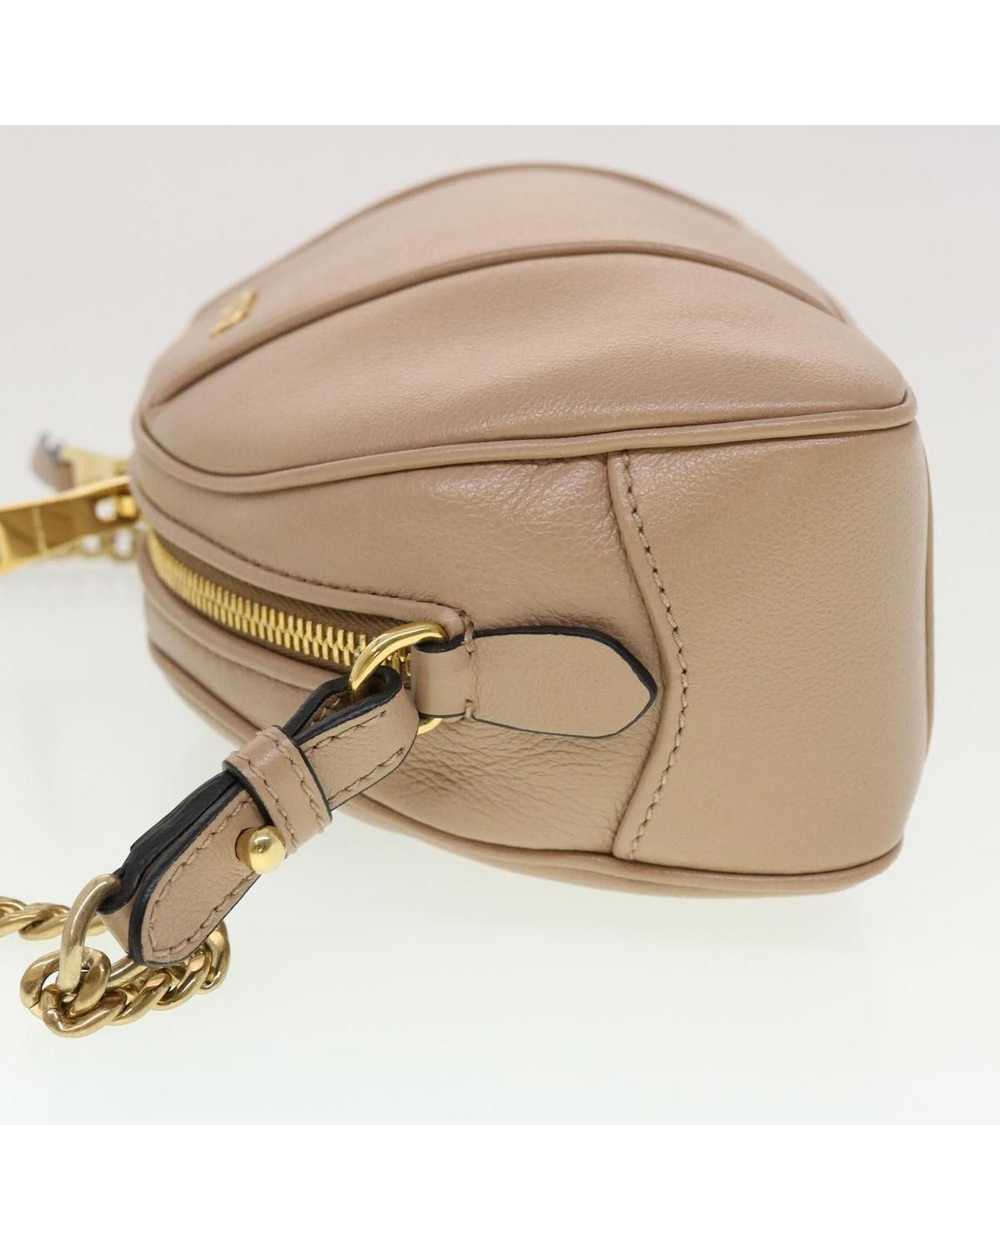 Miu Miu Chain Shoulder Bag Leather Beige Pink - image 3